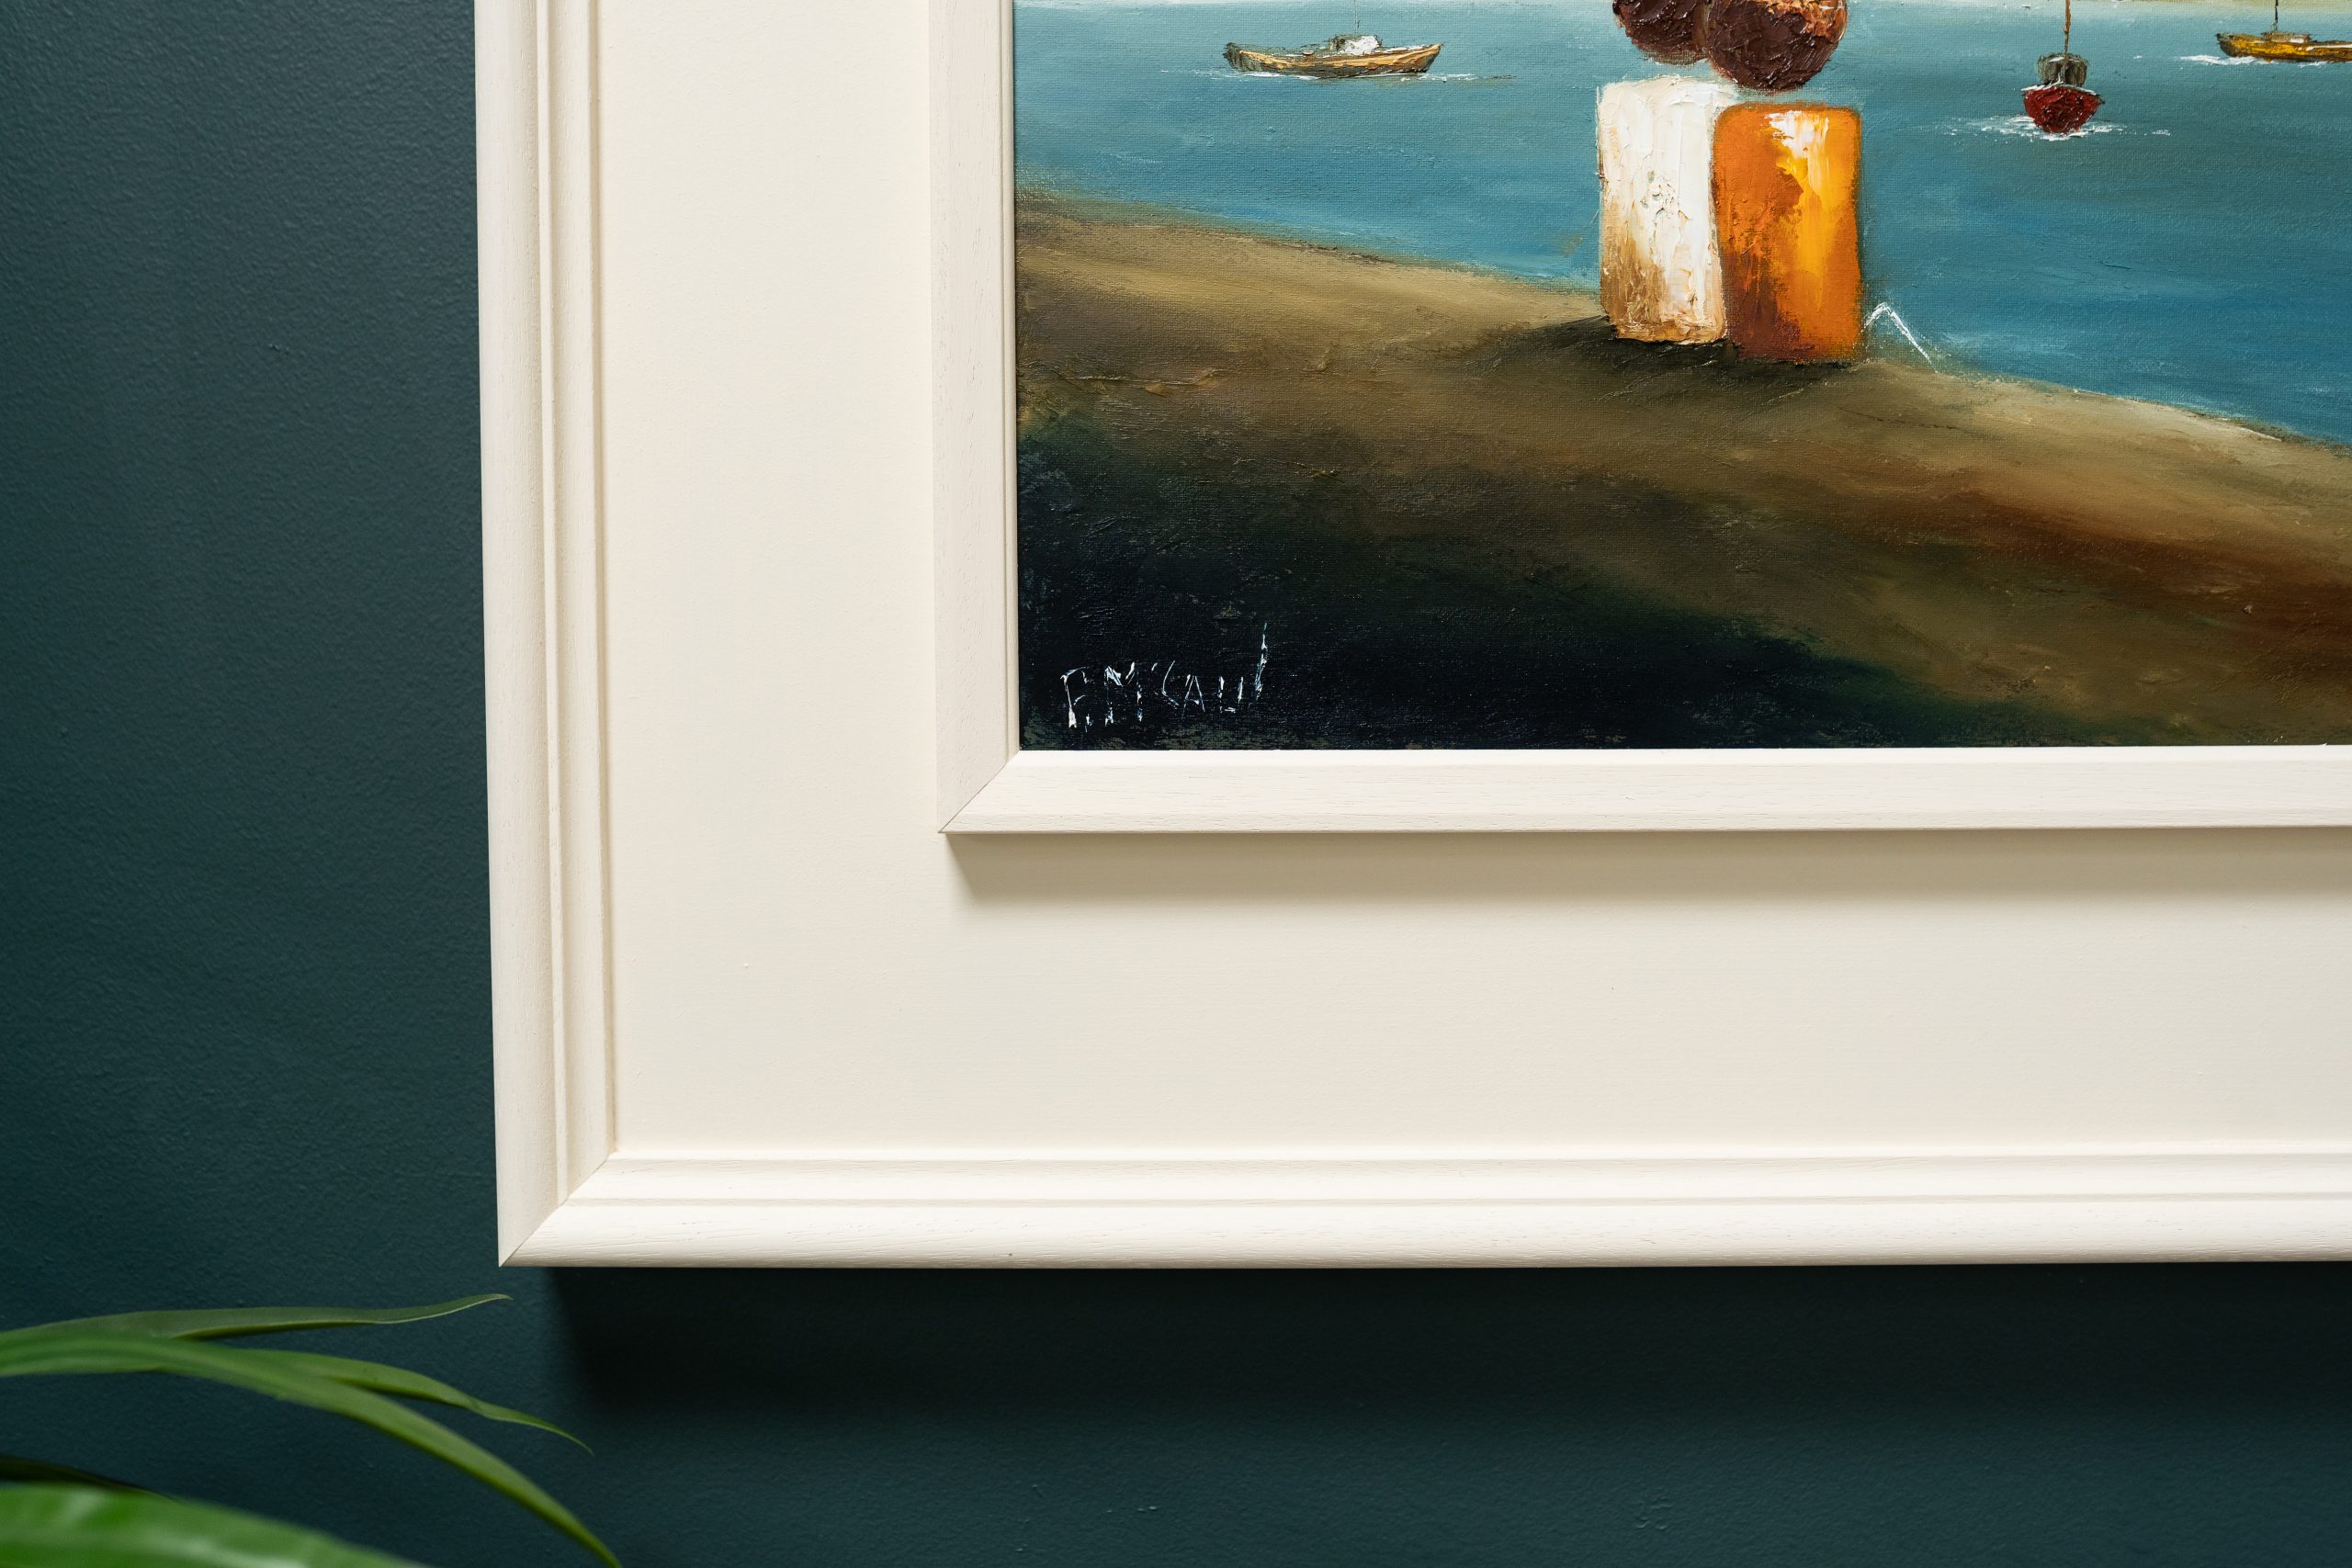 Padraig McCaul original oil painting oil on canvas contemporary art Irish gift wild atlantic way beautiful interiors house home office design decor gift